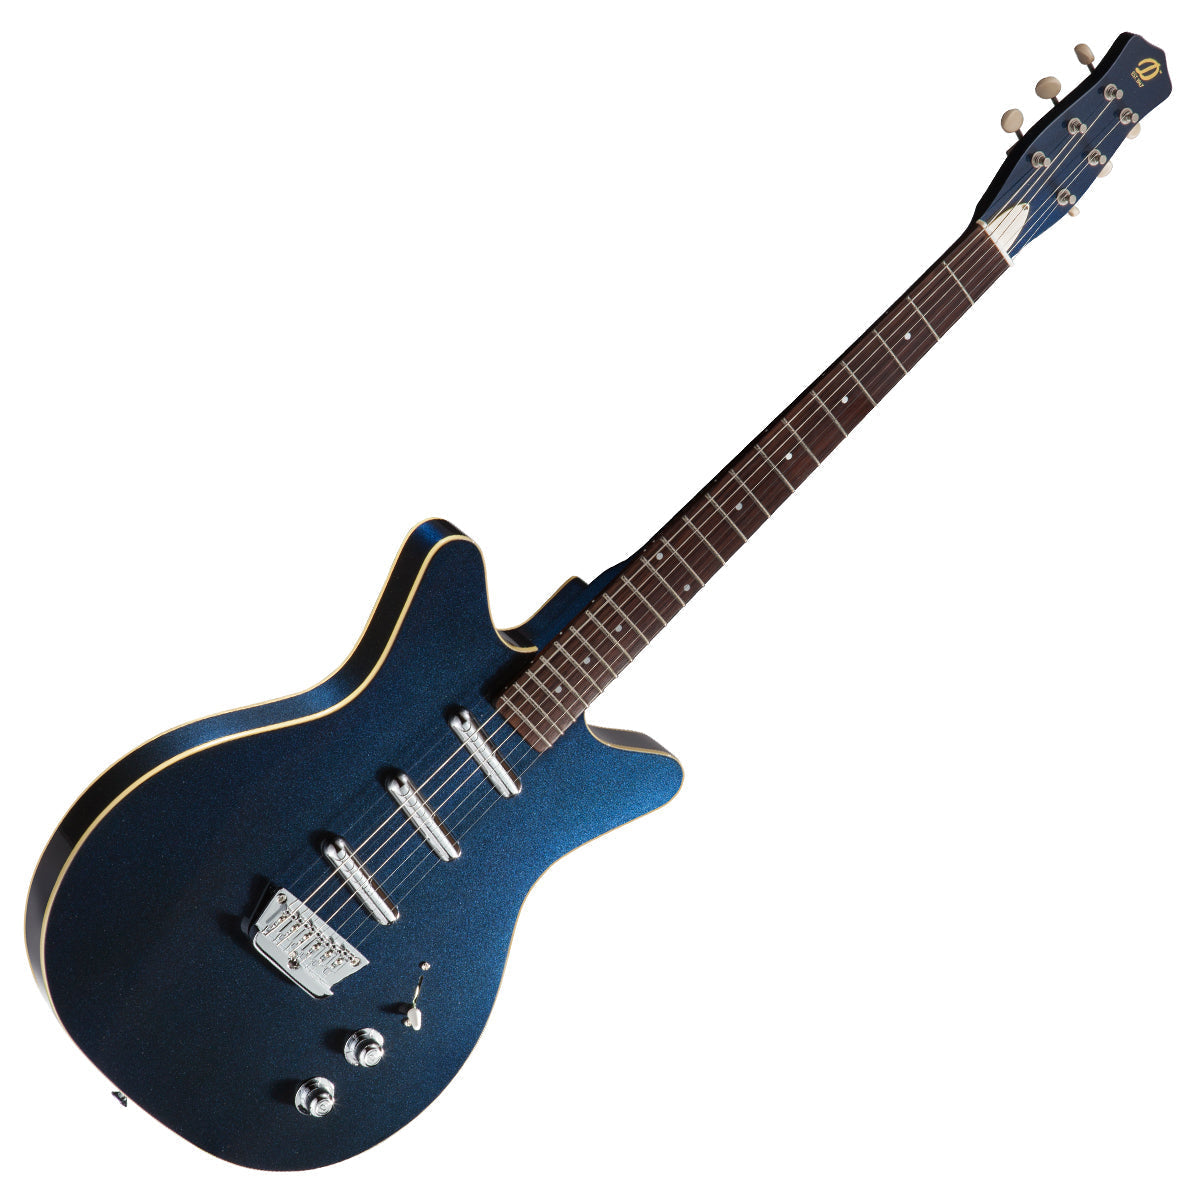 Danelectro Triple Divine Guitar ~ Metallic Blue, Electric Guitar for sale at Richards Guitars.